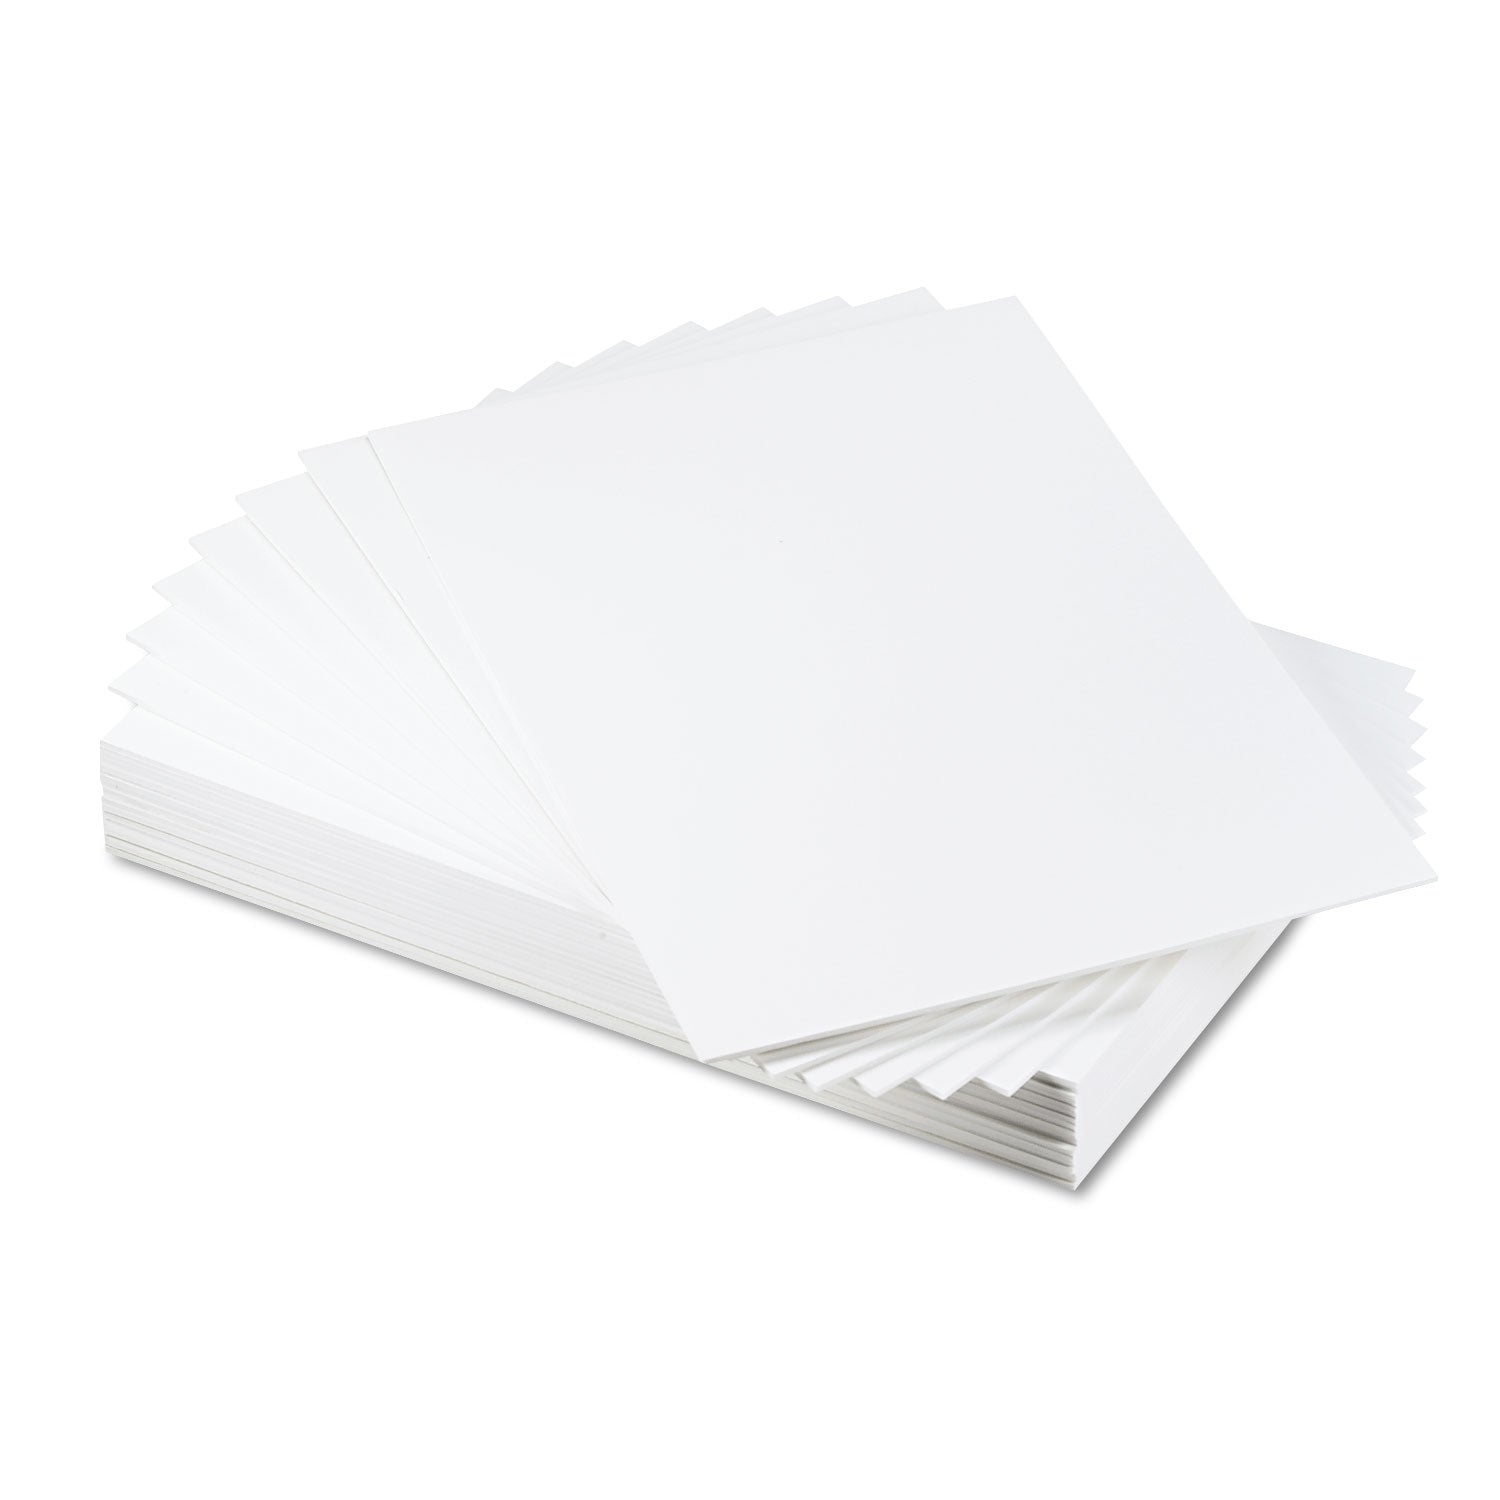 foam-board-cfc-free-polystyrene-20-x-30-white-surface-and-core-25-carton_acj07012109 - 1